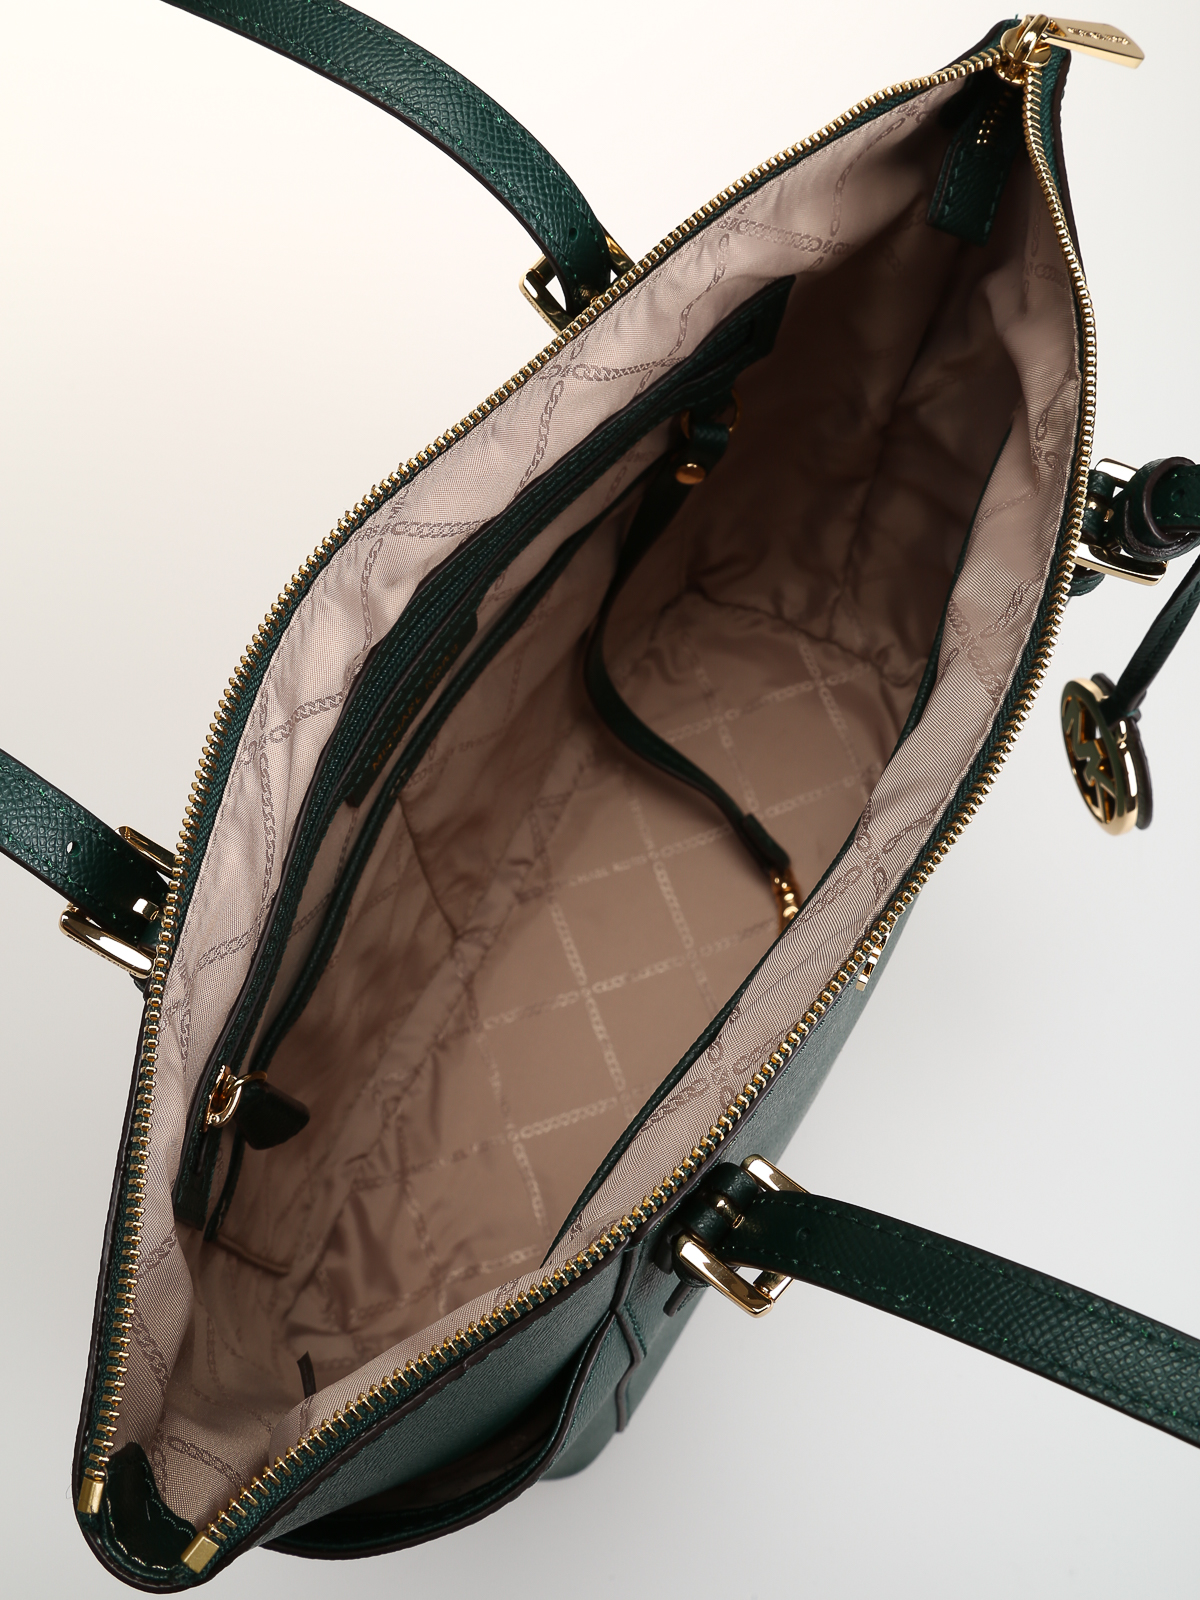 Michael Kors Bag Handbag Jet Set Travel Chain X LG Leather Palmetto Green  New  eBay